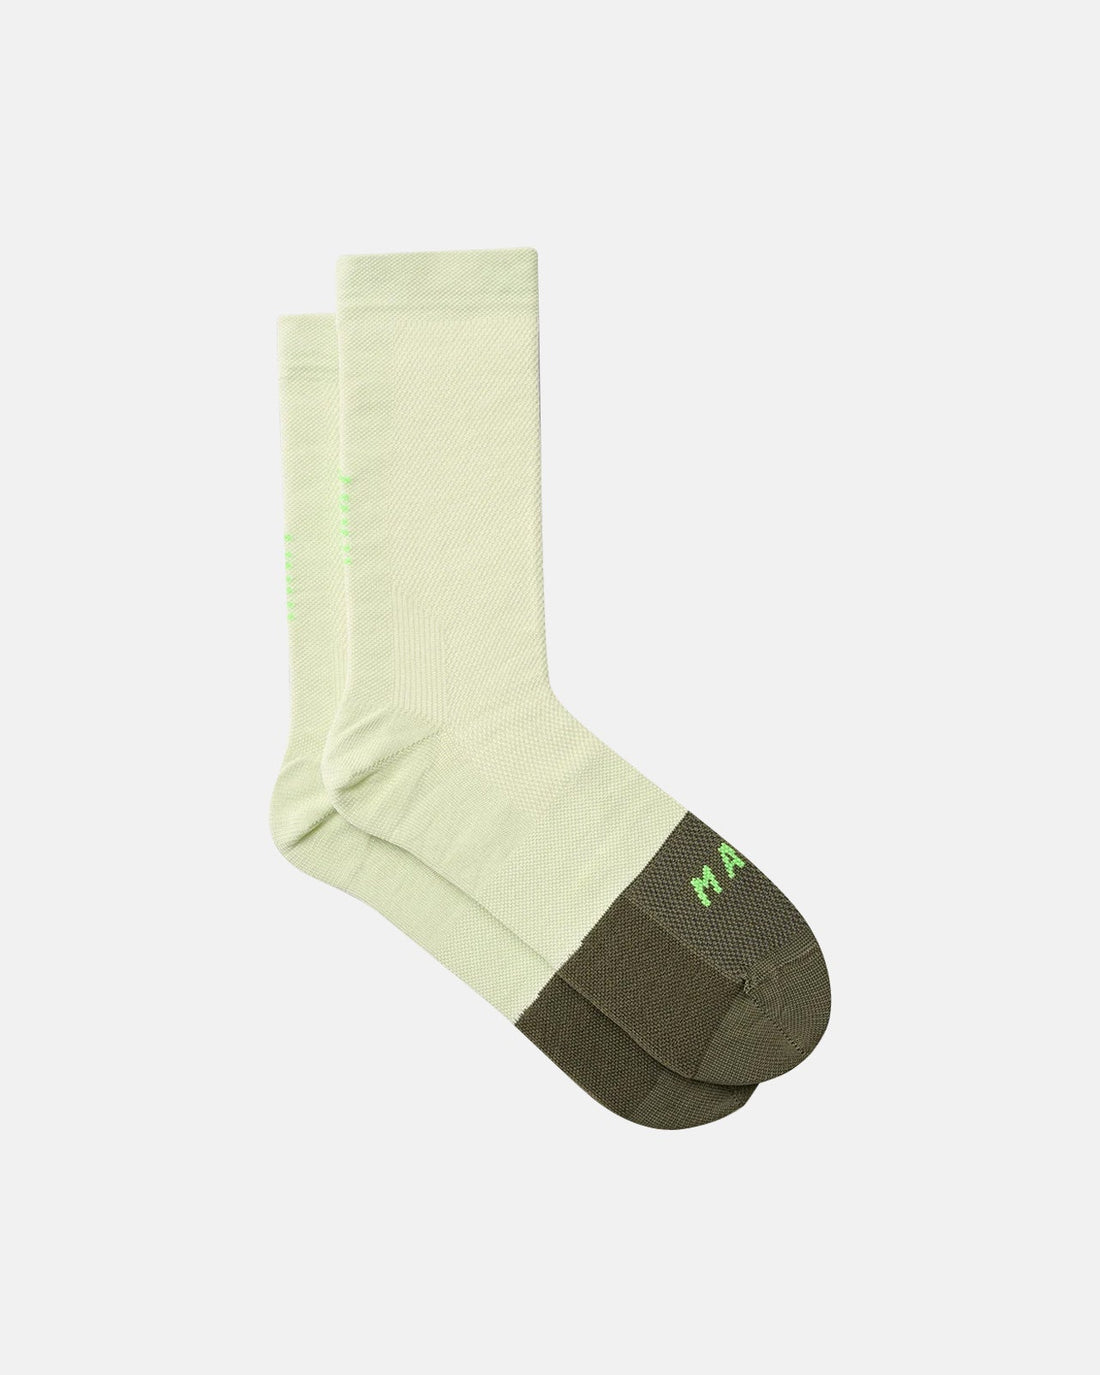 Division Sock - Dew/Bronze Green - MAAP